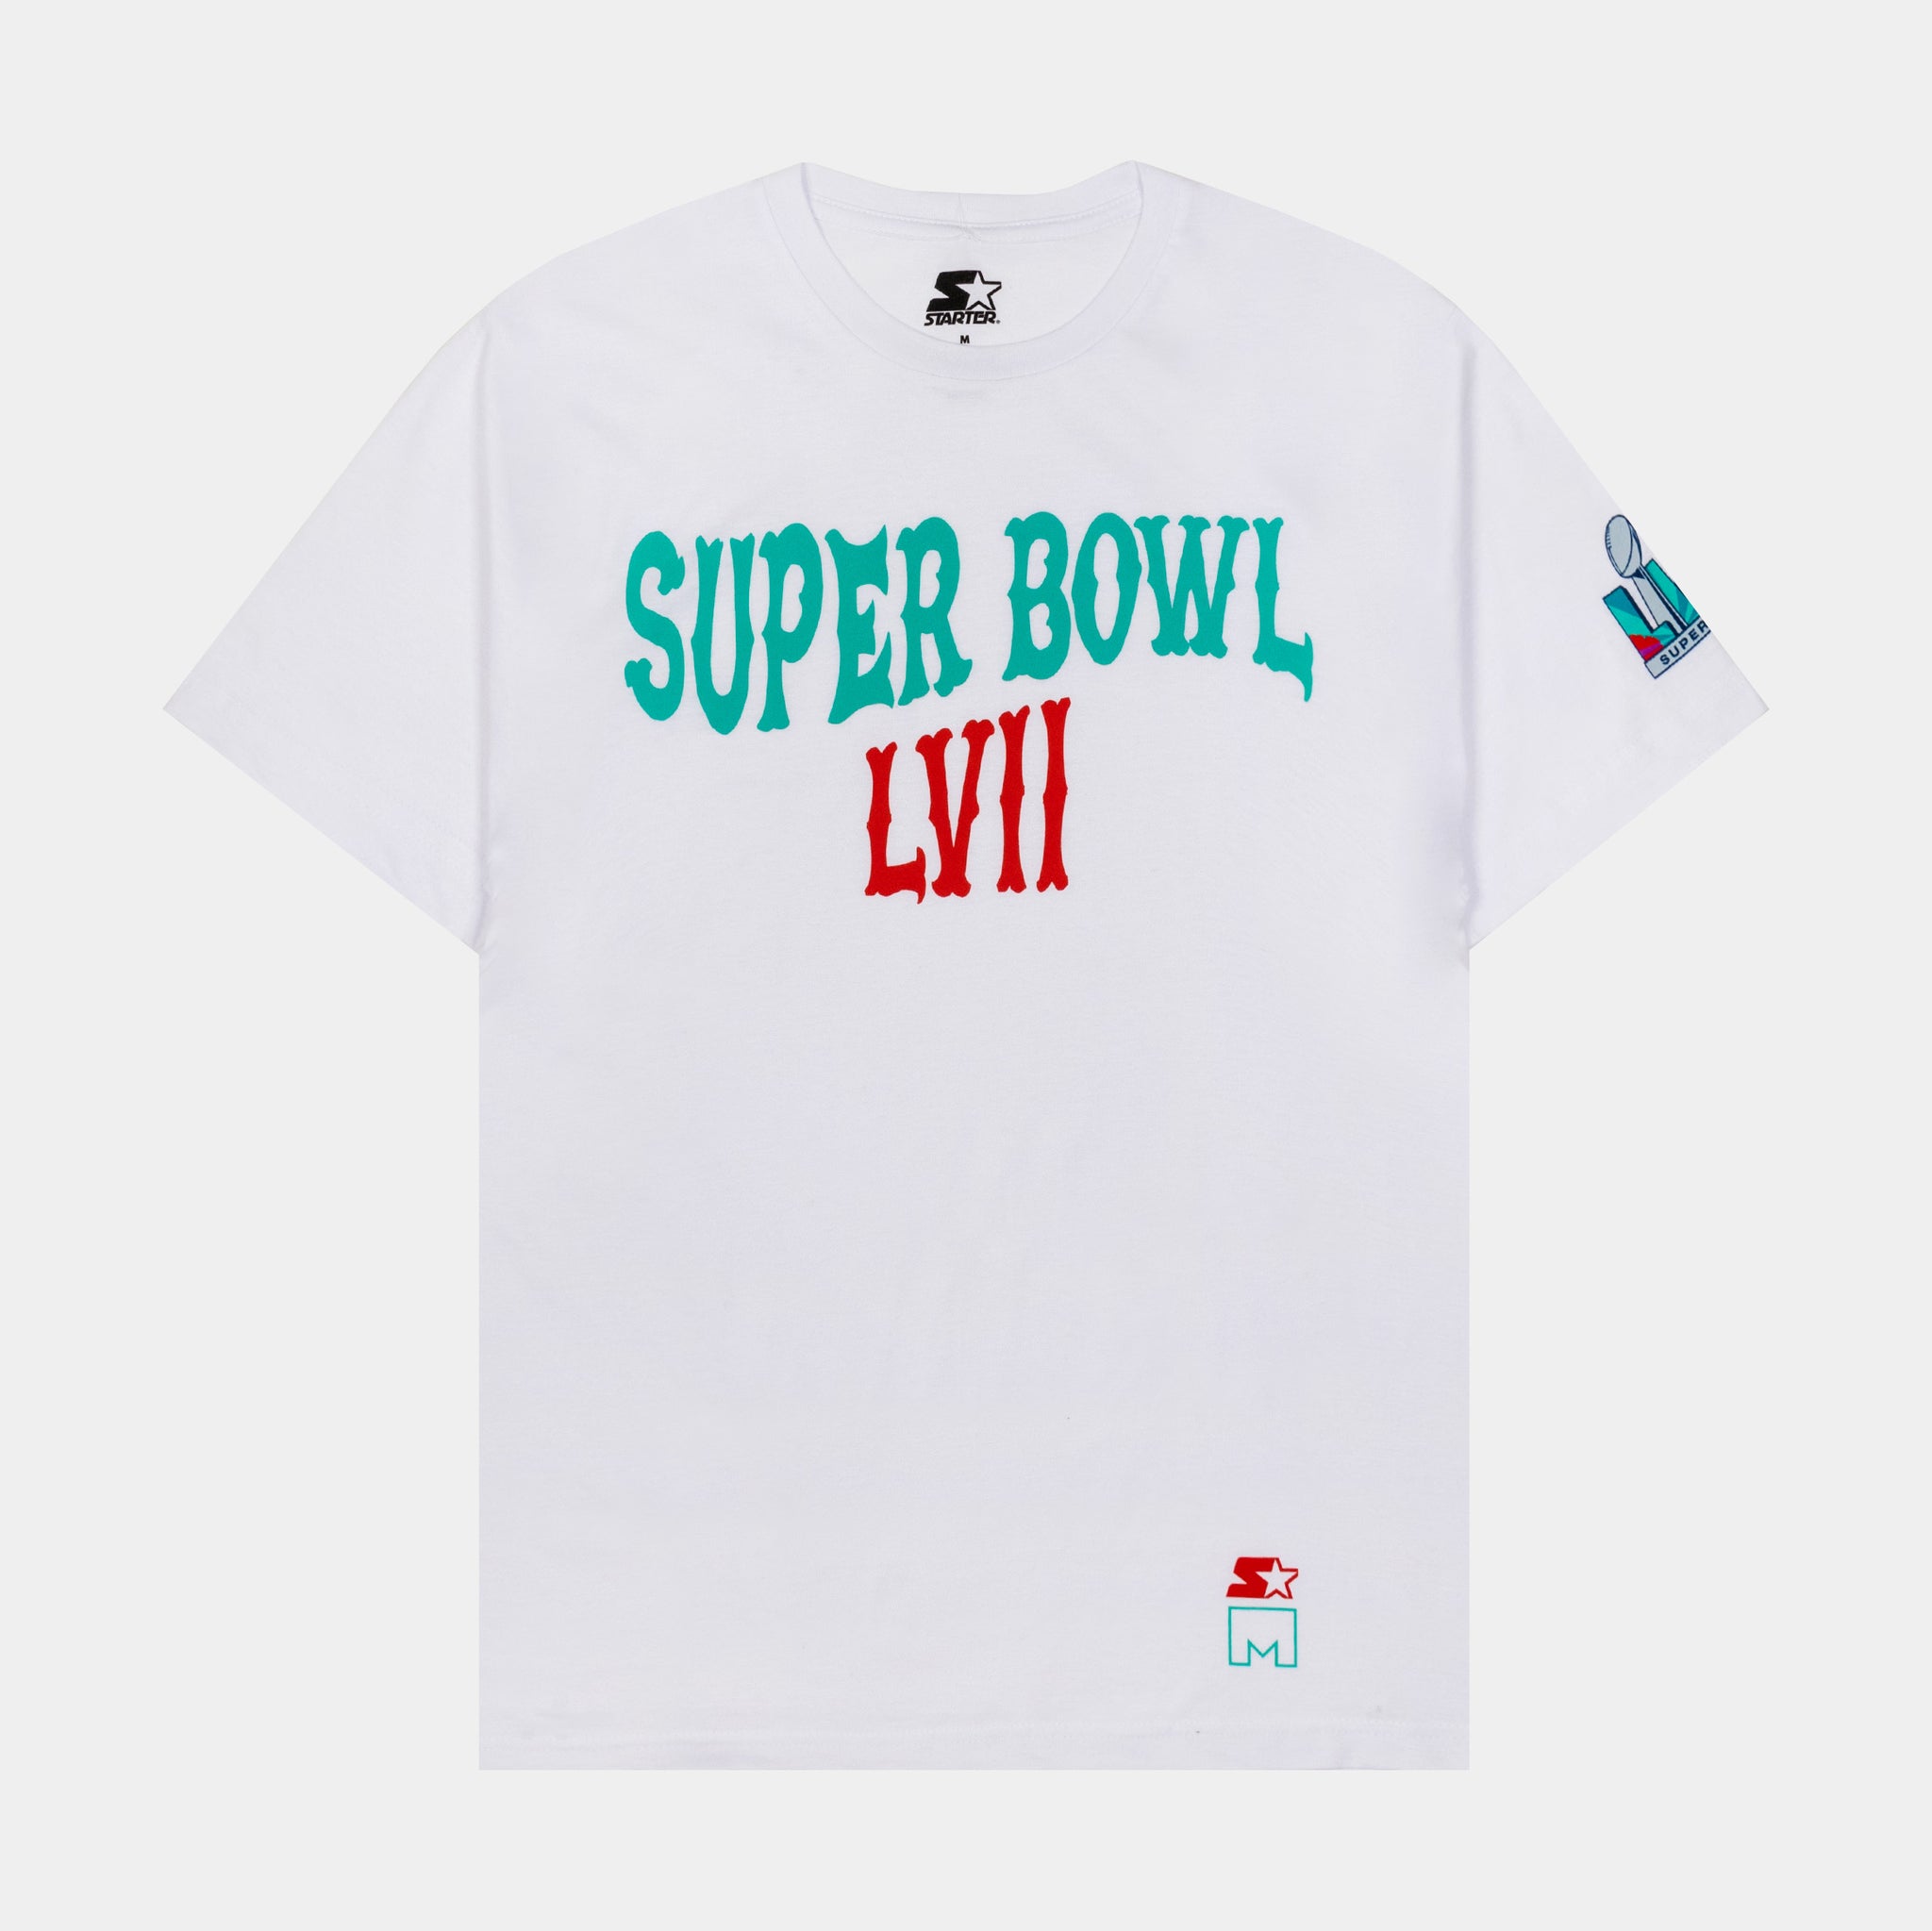 Cheap Super Bowl LVII Apparel, Discount Super Bowl Gear, NFL Super